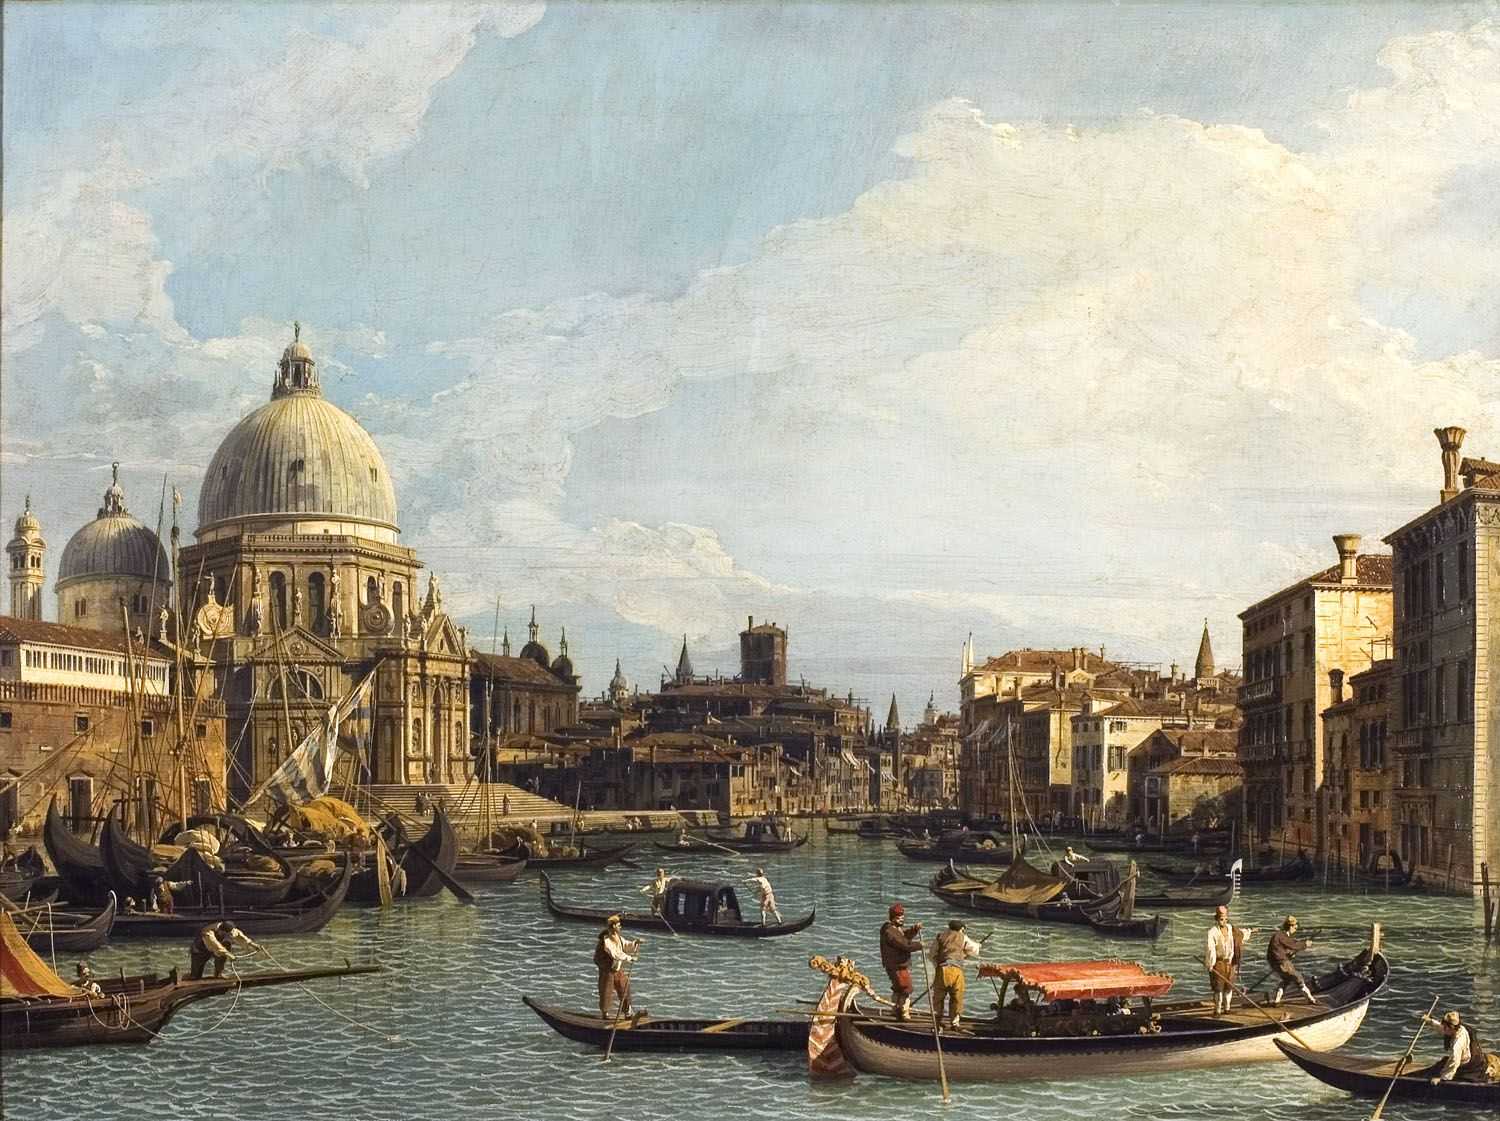 Вид на дворец дожей в венеции, антонио каналь (каналетто)